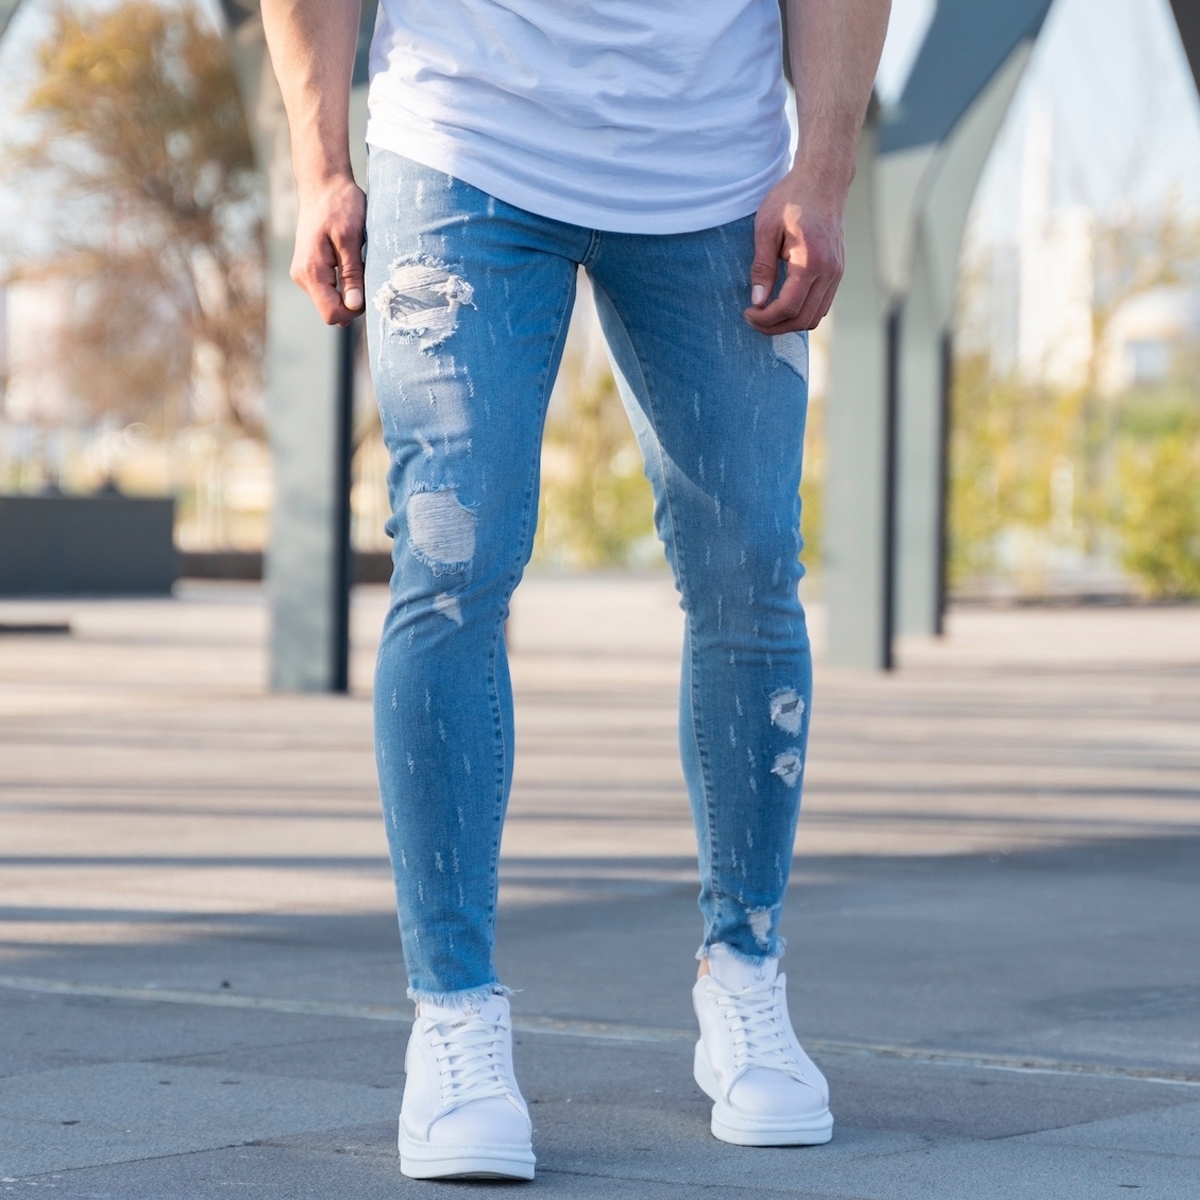 Men's Ragged Jeans In Ice Blue